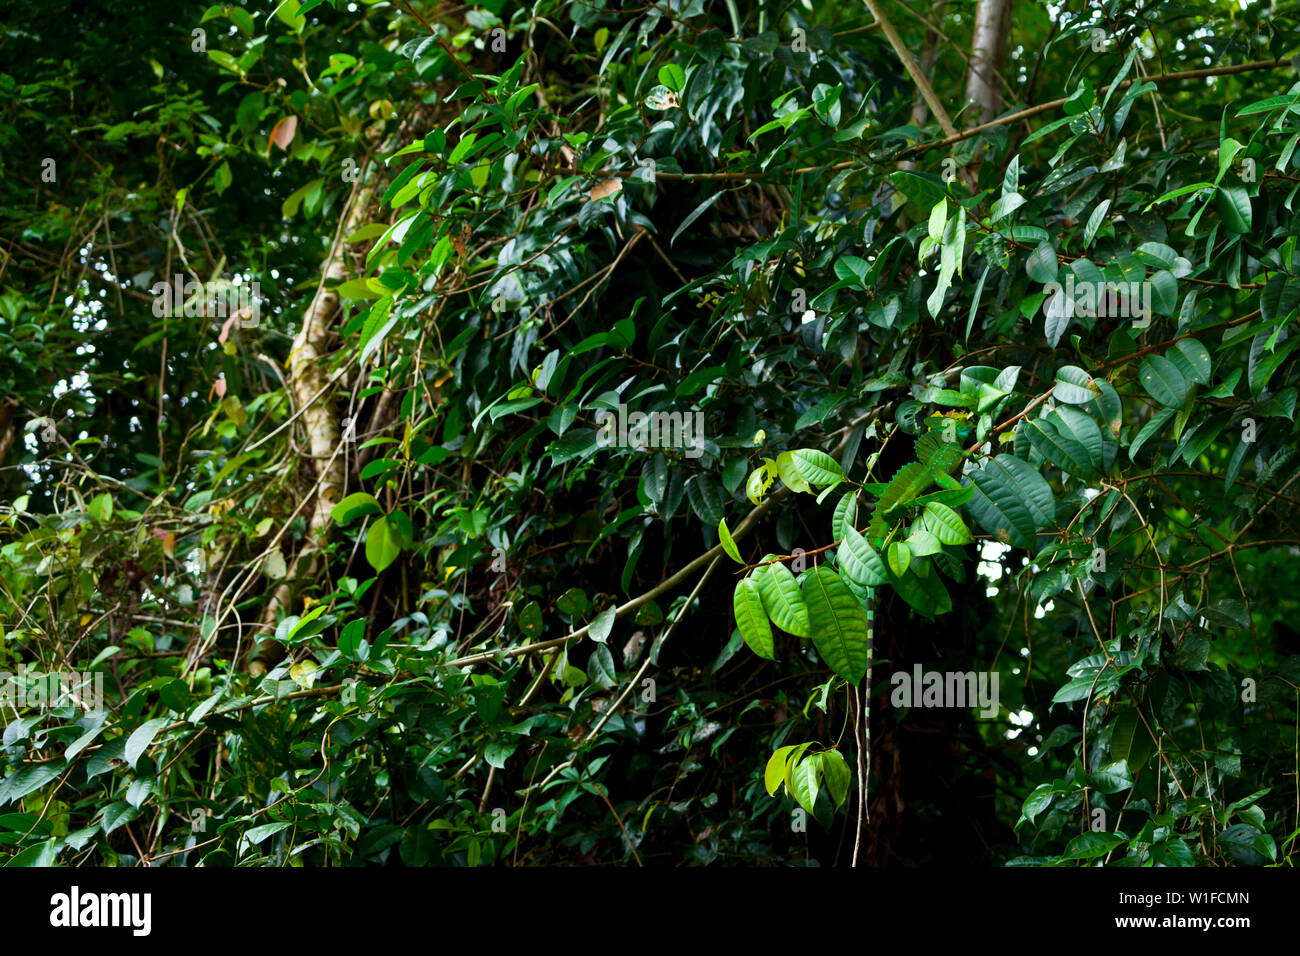 PLUMED BASILISCK - BASILISCO VERDE (Basiliscus plumifrons), Santa Elena Cloud Forest Nature Reserve, Costa Rica, Central America, America Stock Photo